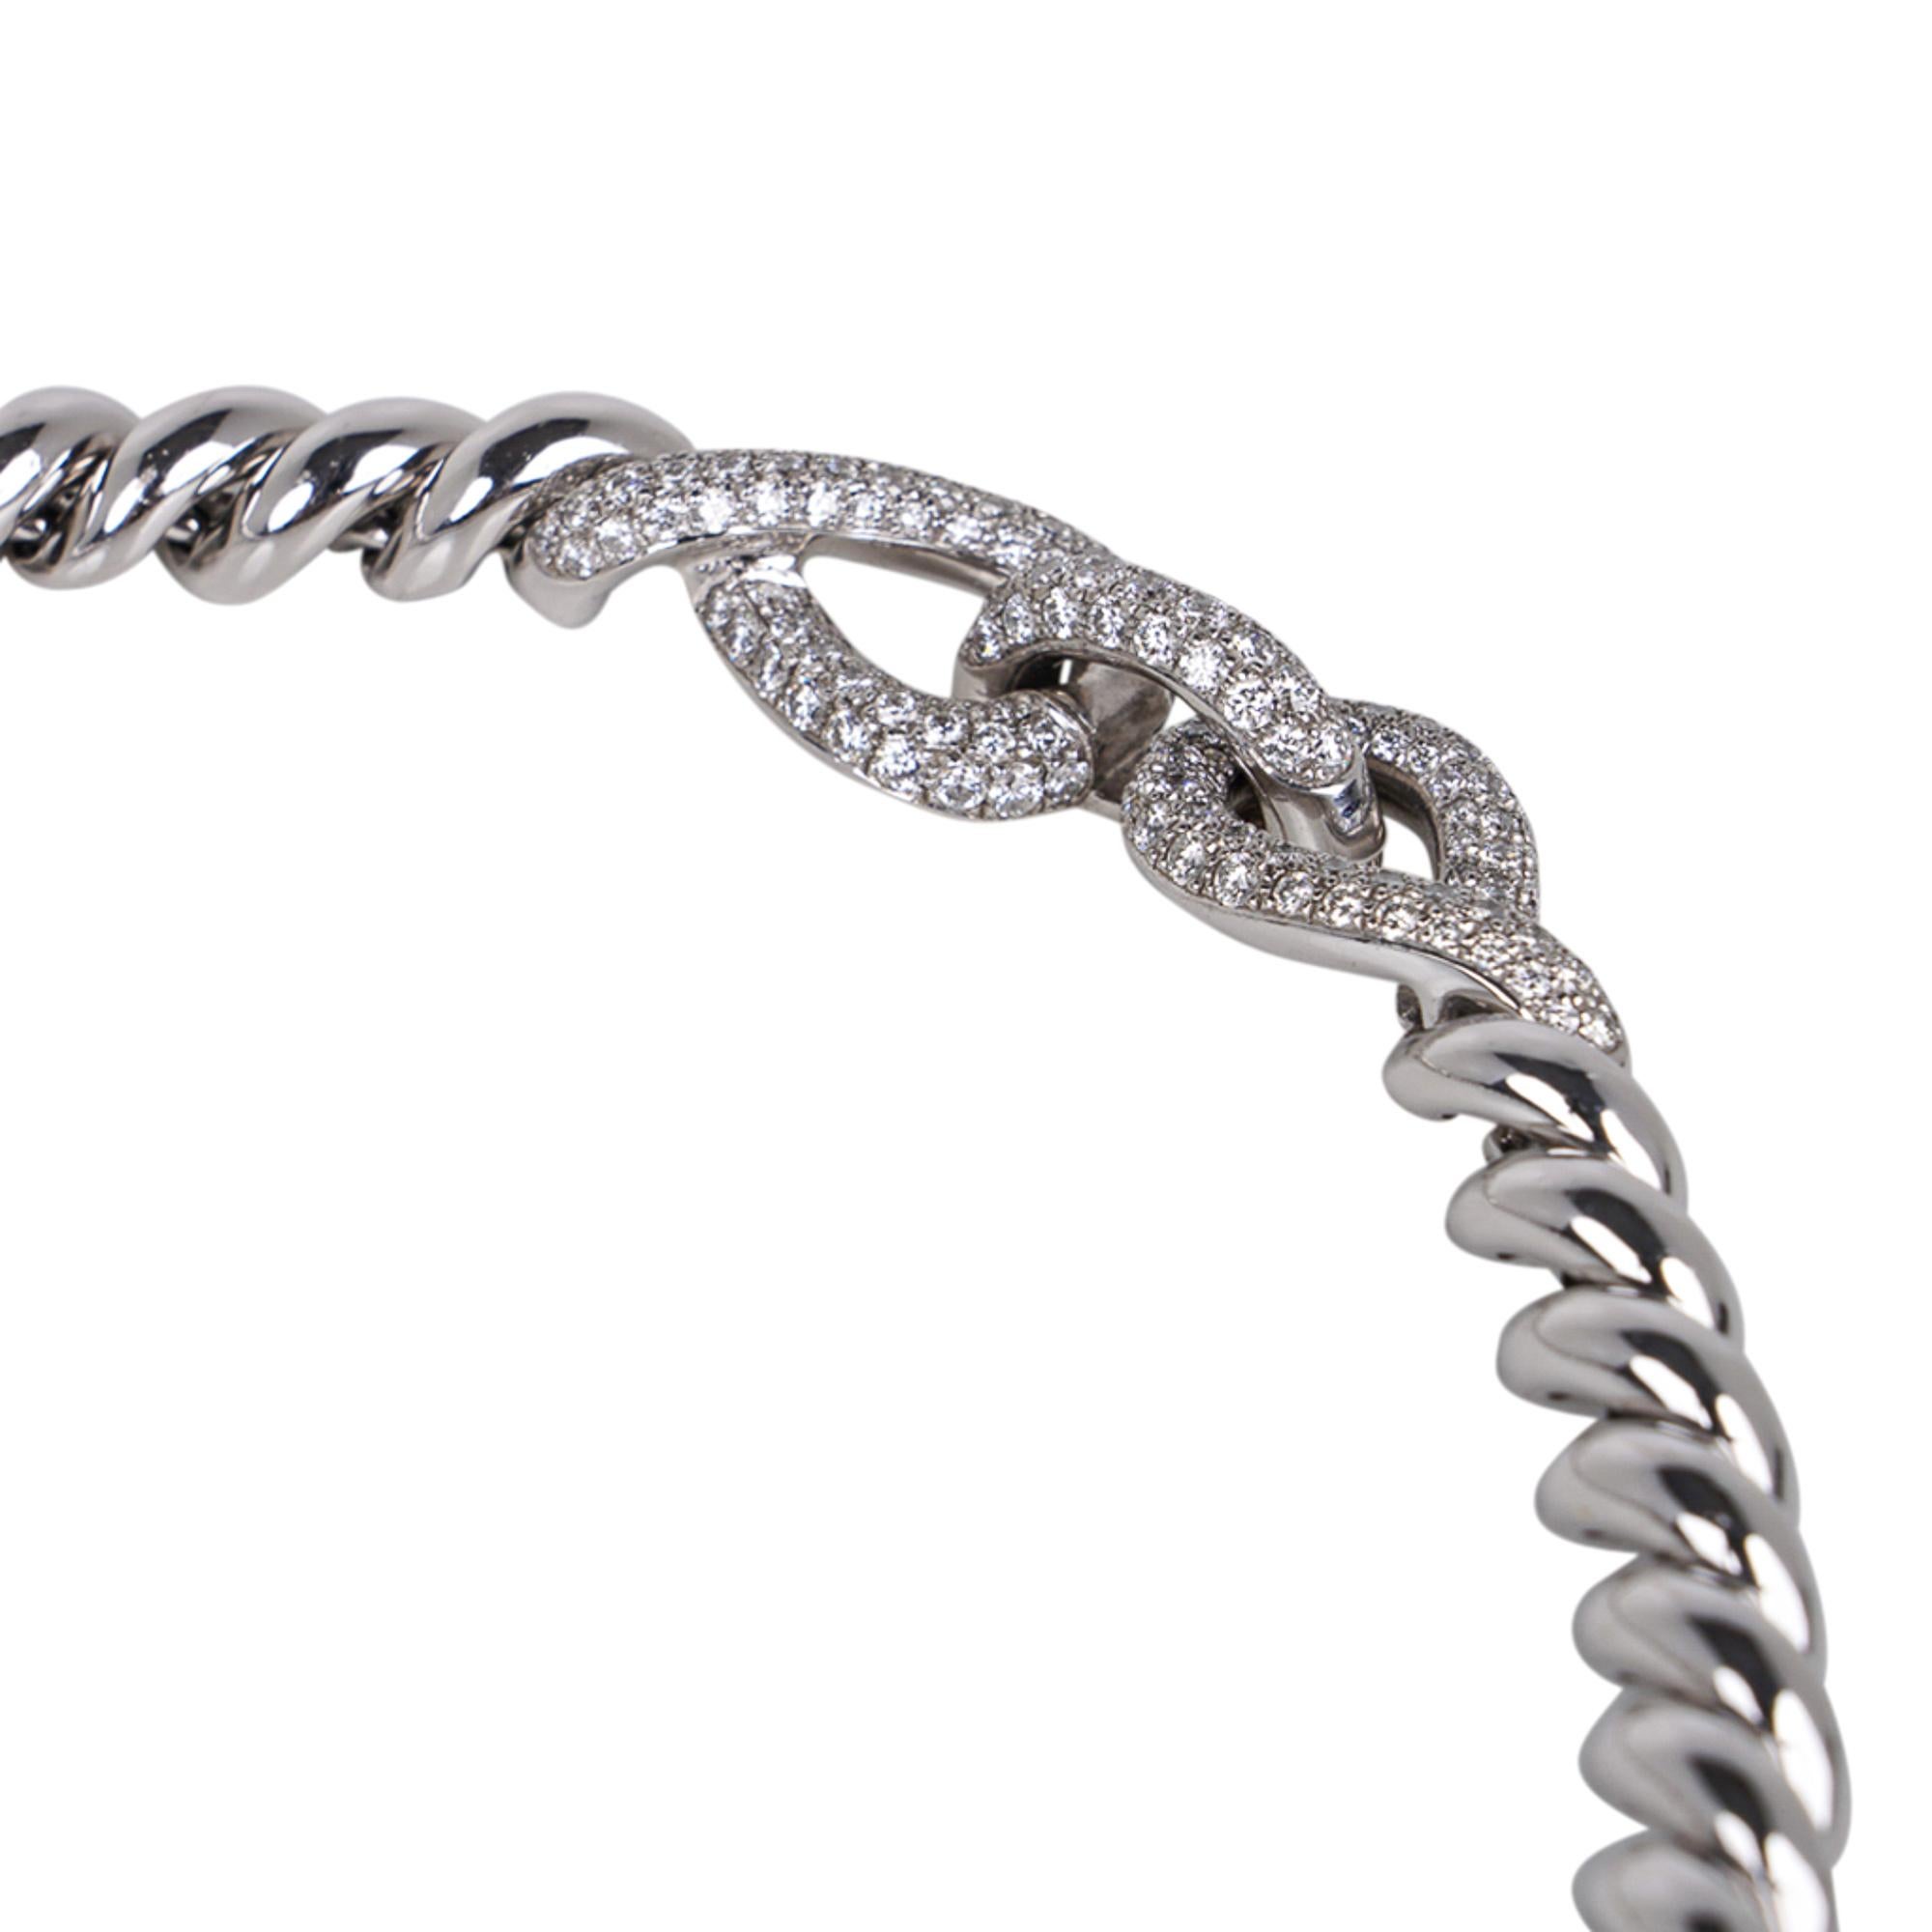 Brilliant Cut Hermes Diamond Torsade Necklace 18K White Gold Necklace  For Sale